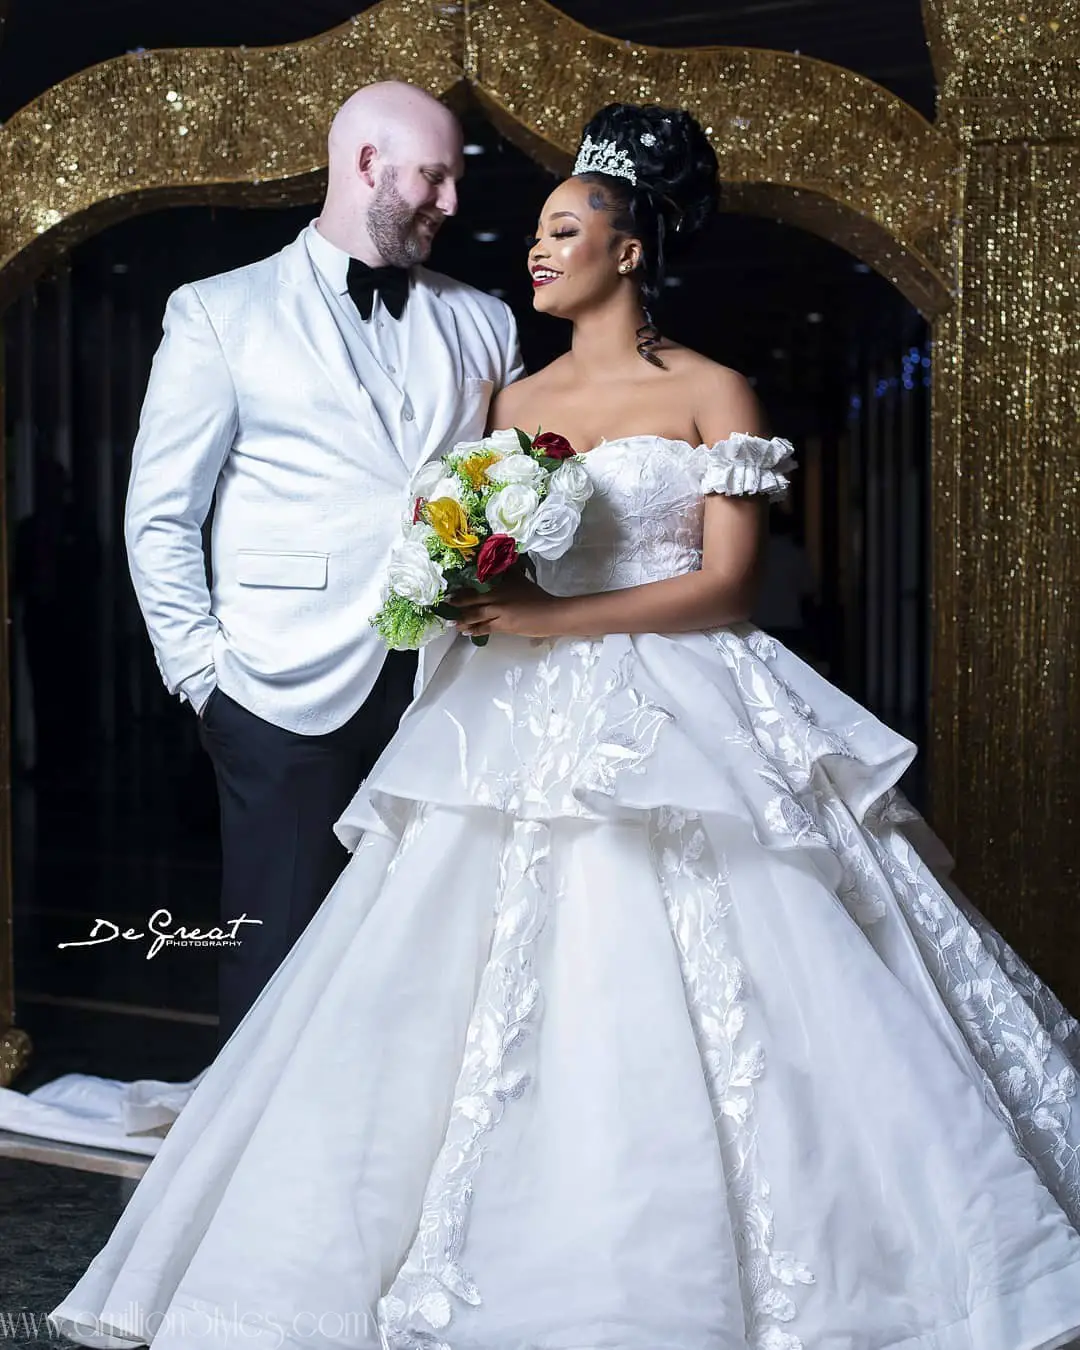 19 Stunning Wedding Dresses For 2021